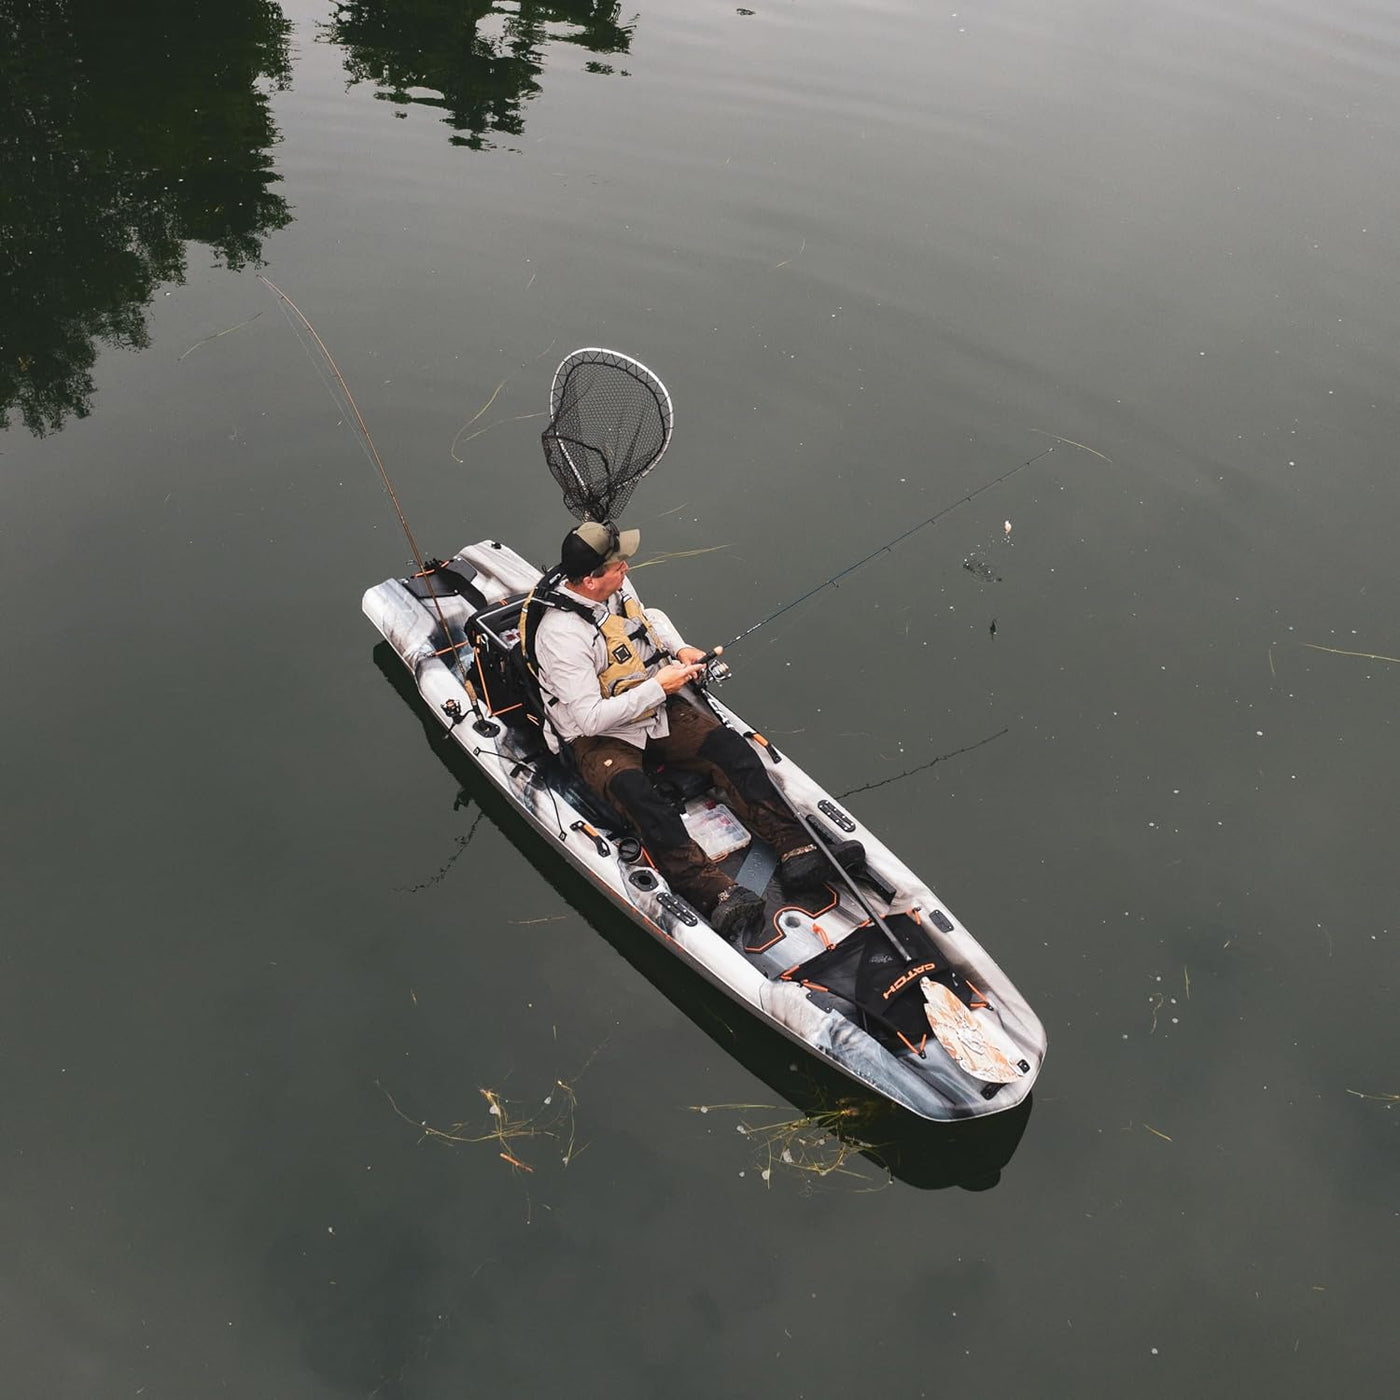 Pelican Catch Mode 110 Fishing Kayak - Premium Angler Kayak with Lawnchair  seat - 10.5 Ft.